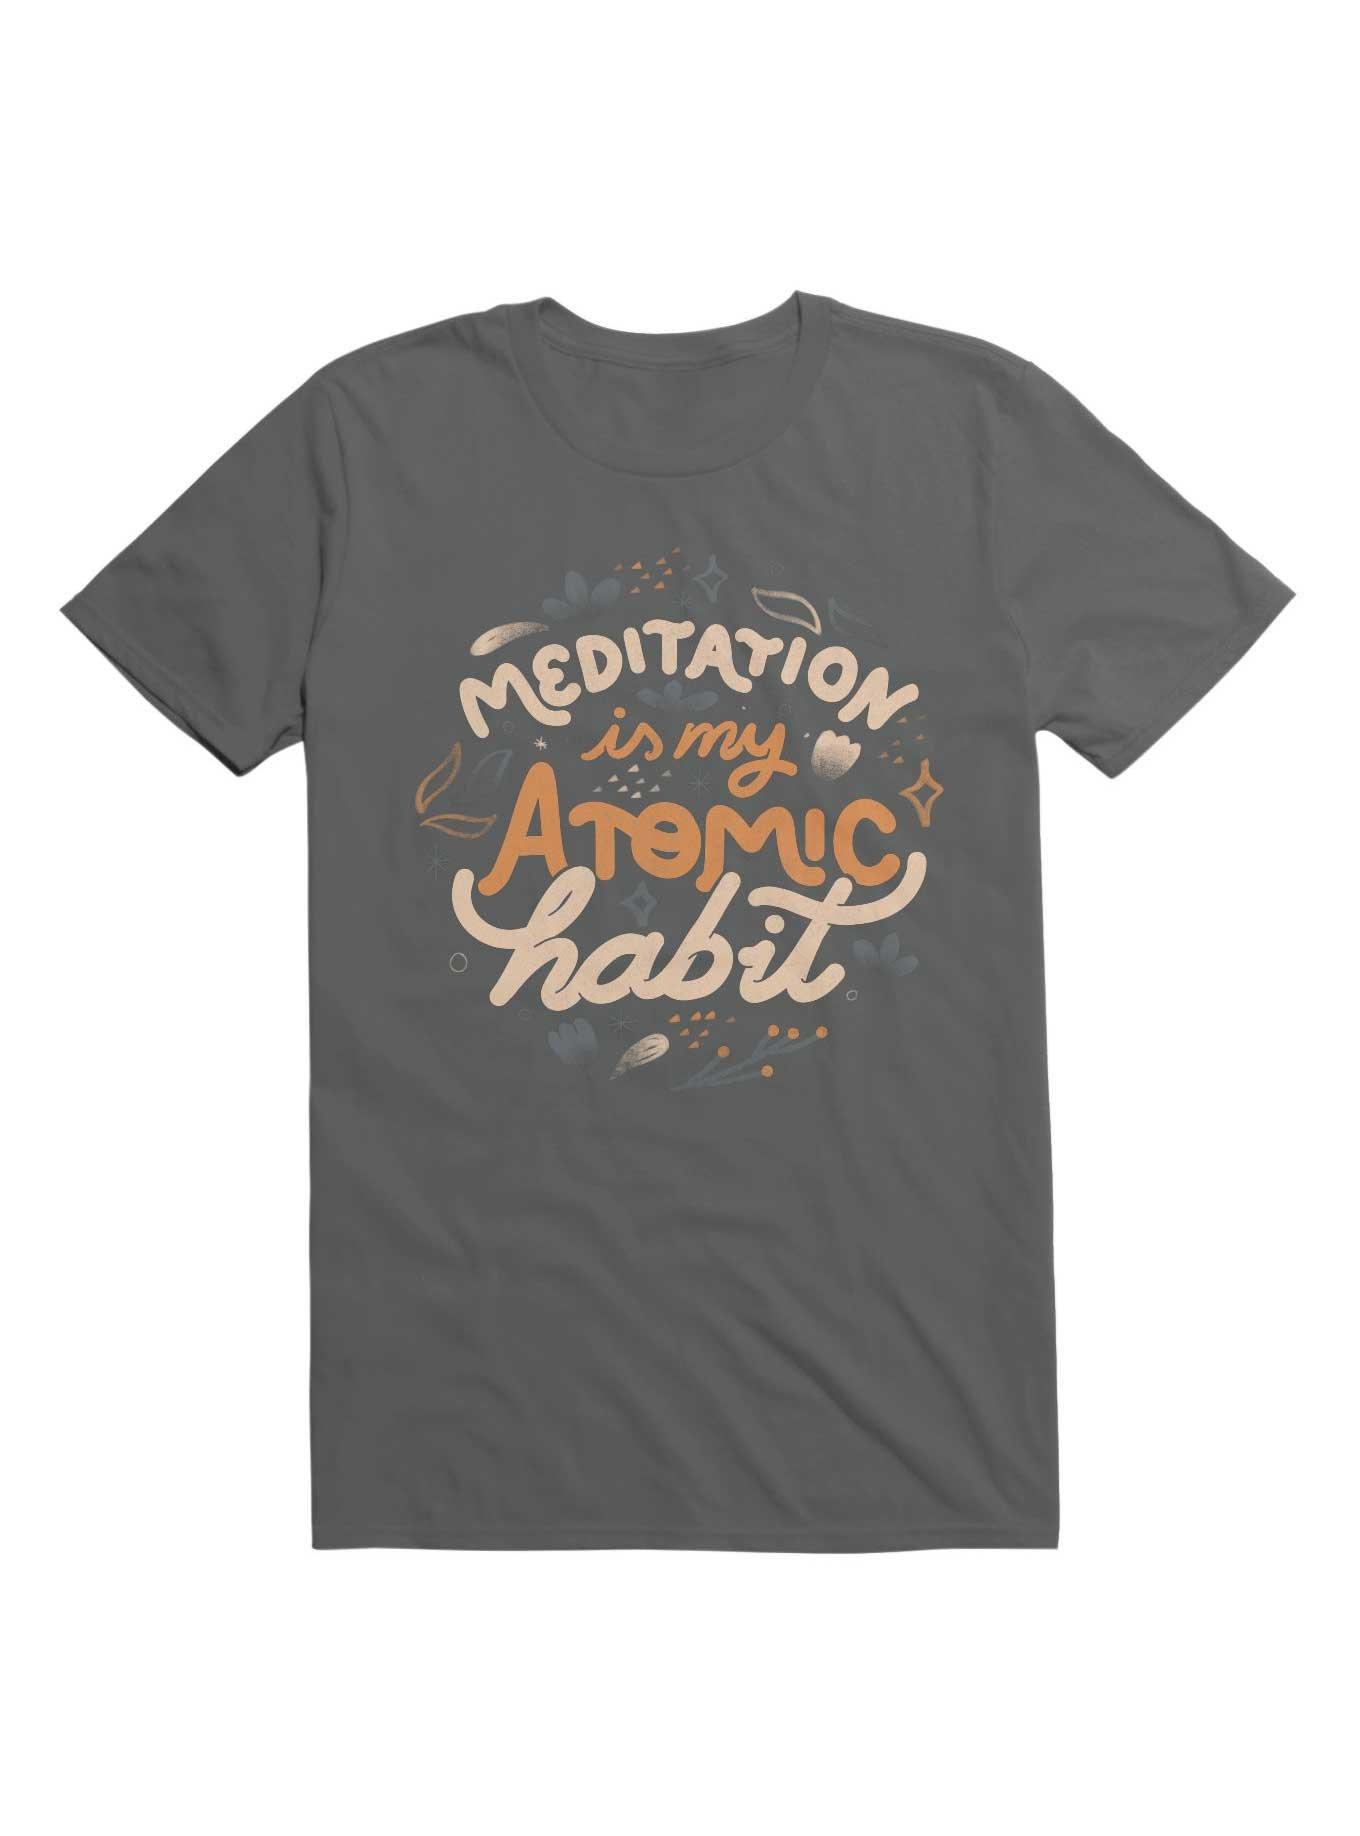 Meditation is My Atomic Habit T-Shirt